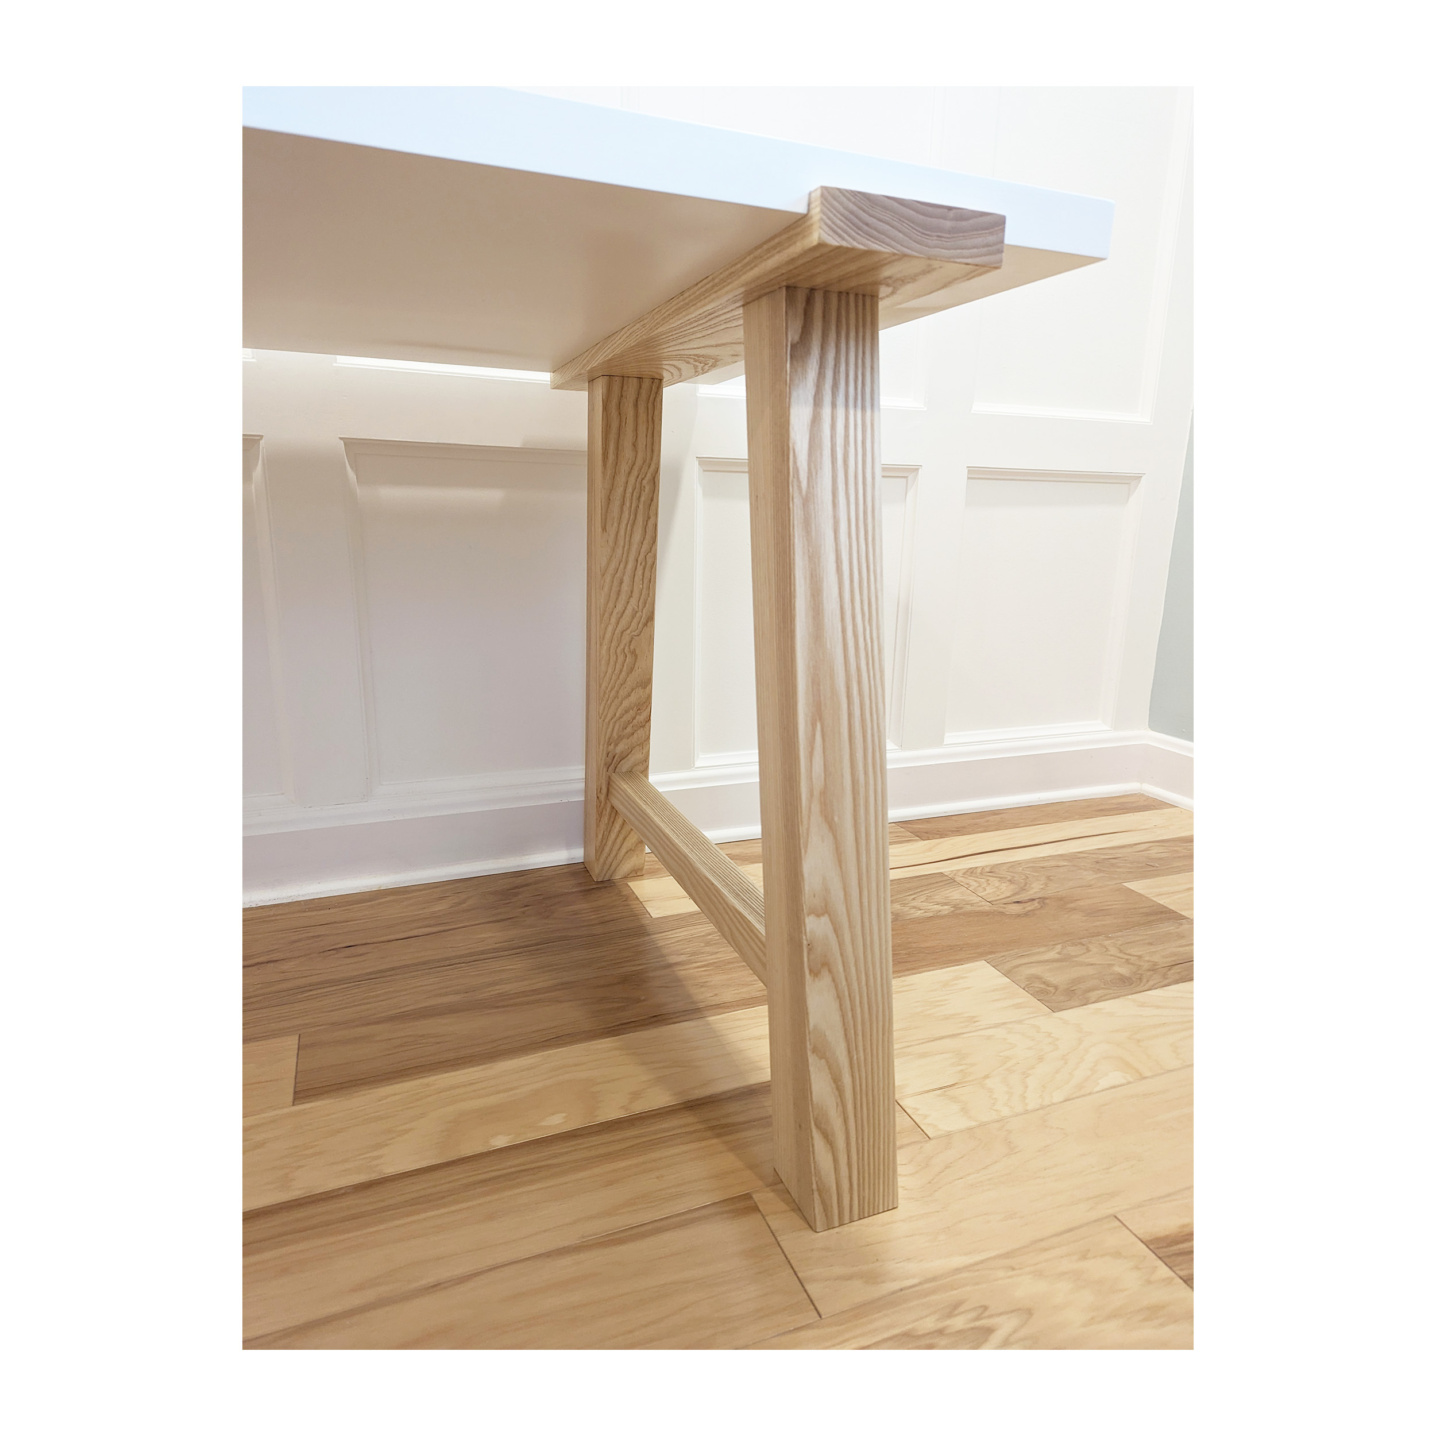 Solid wood desk legs